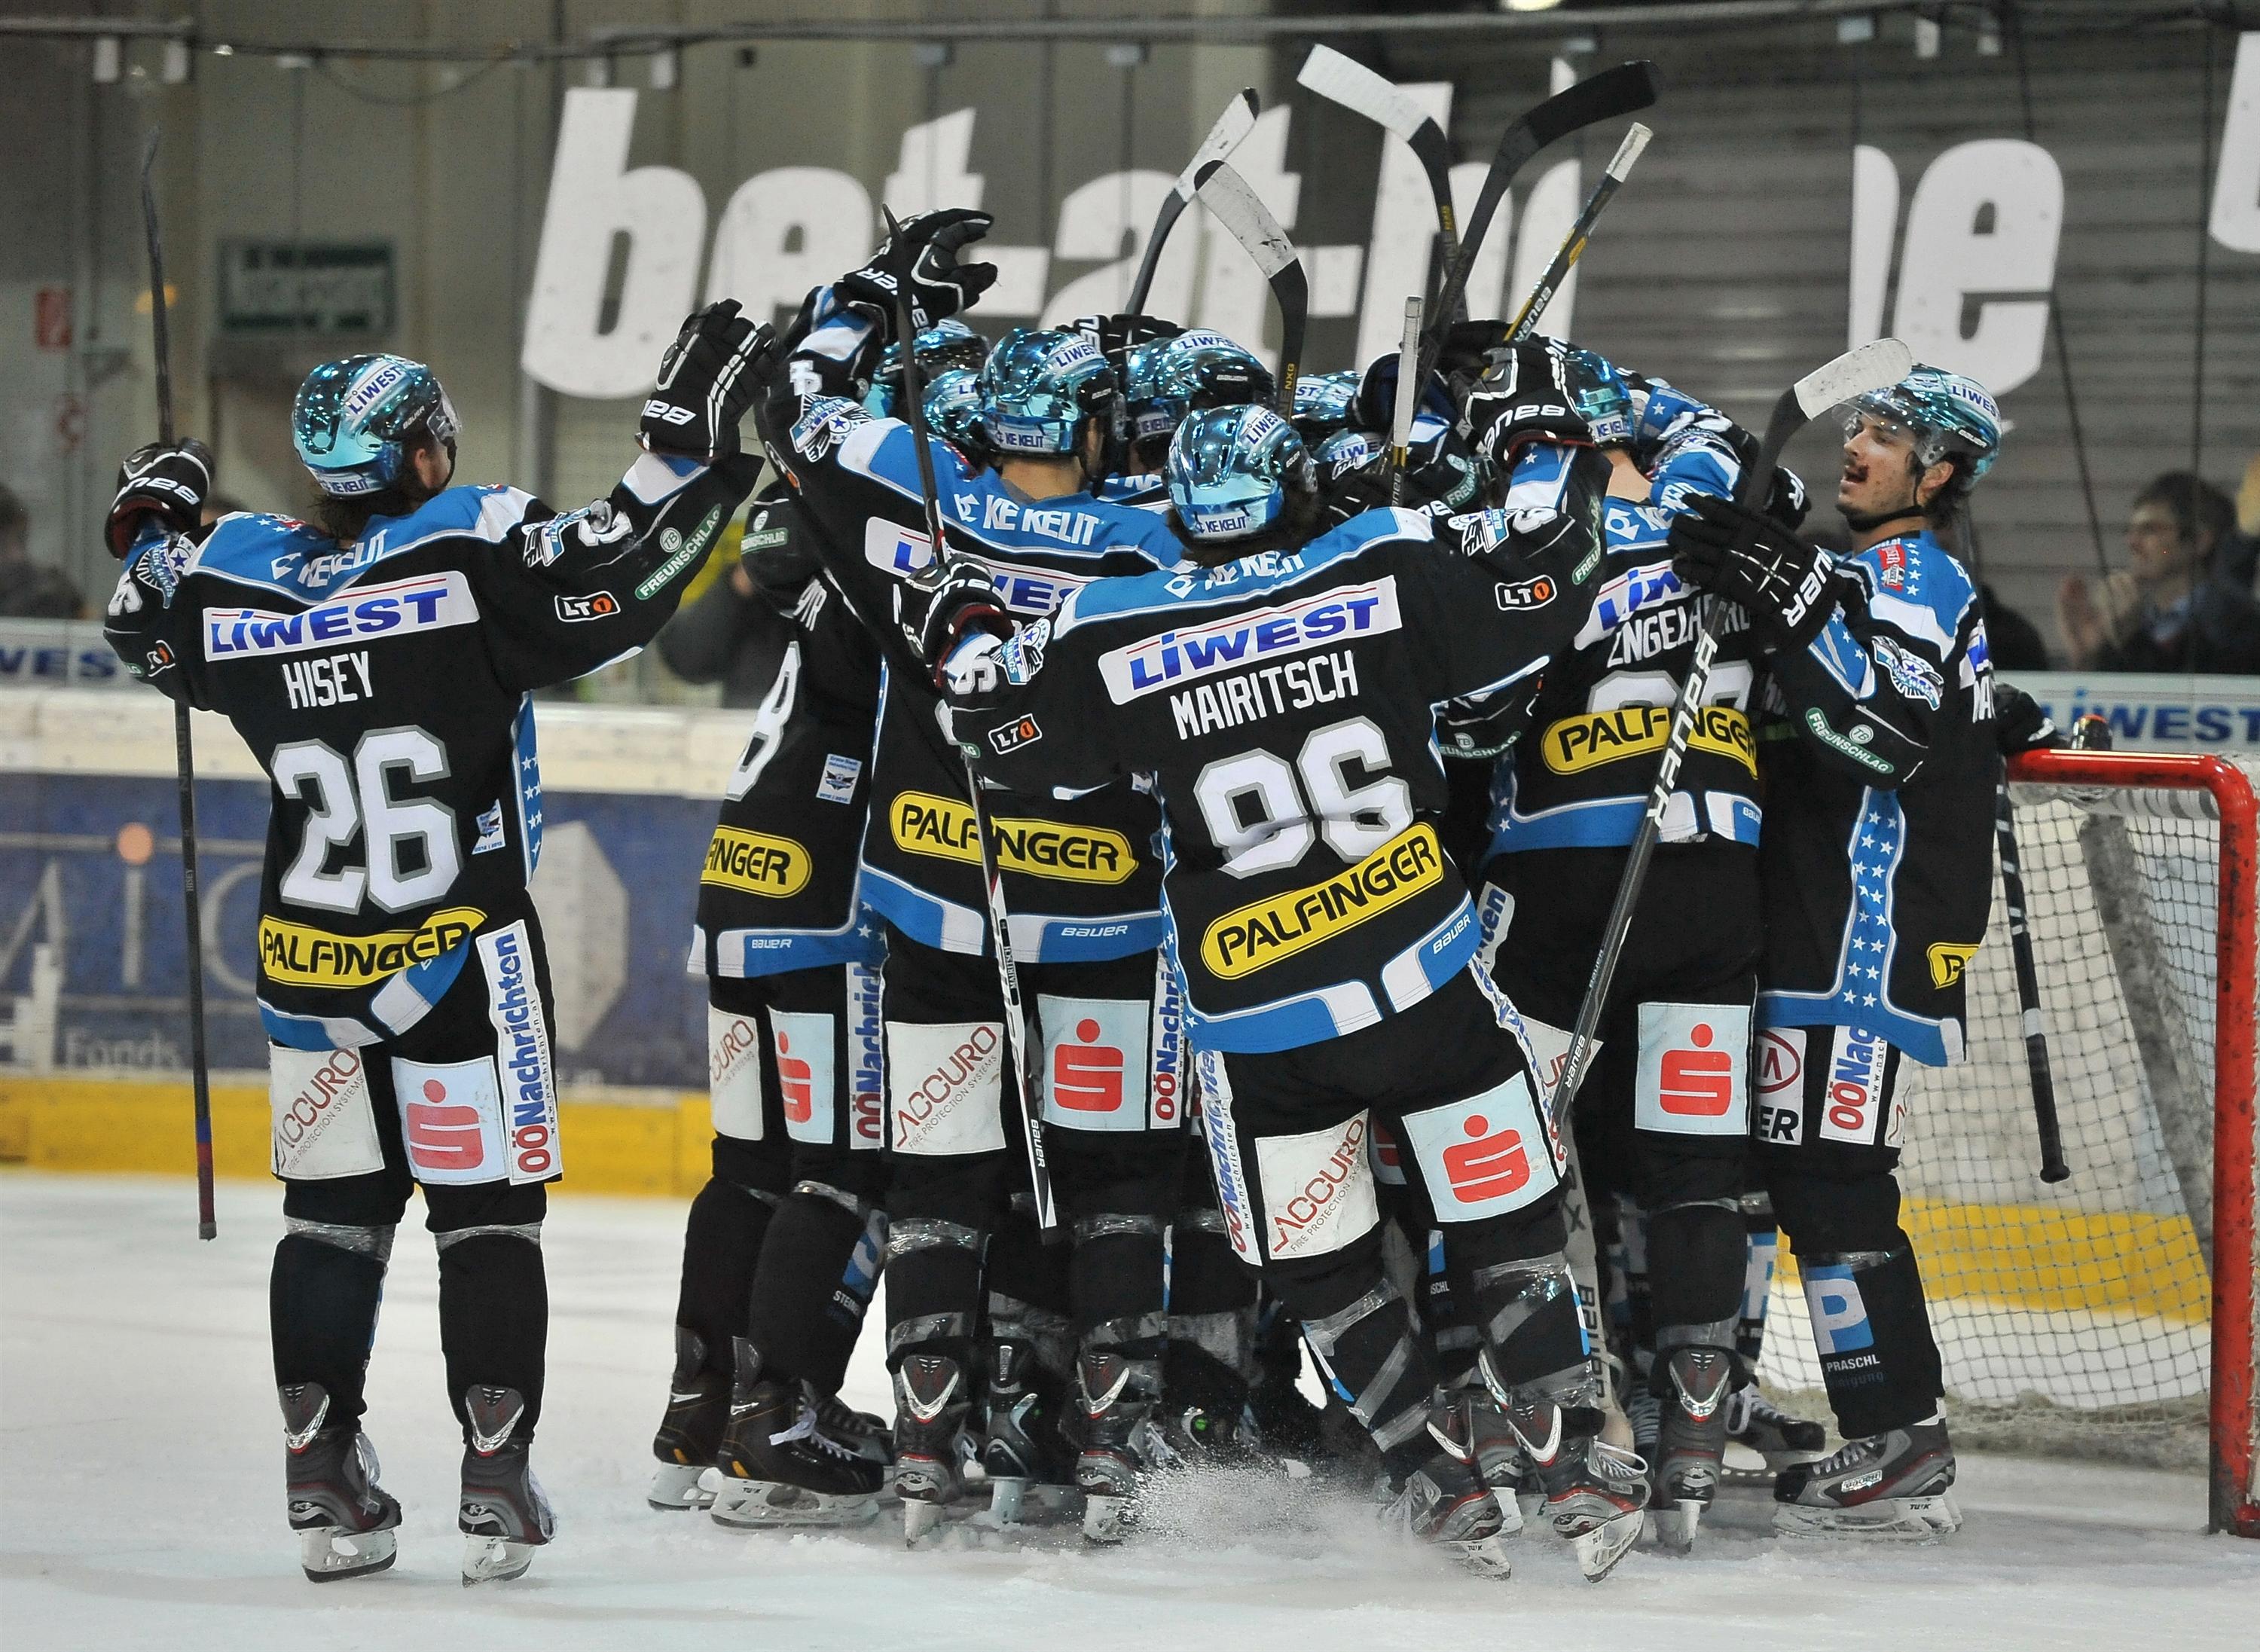 Eishockey Black Wings Linz vs VSV 10.03.2013 – Linzer Jubel nach Sieg